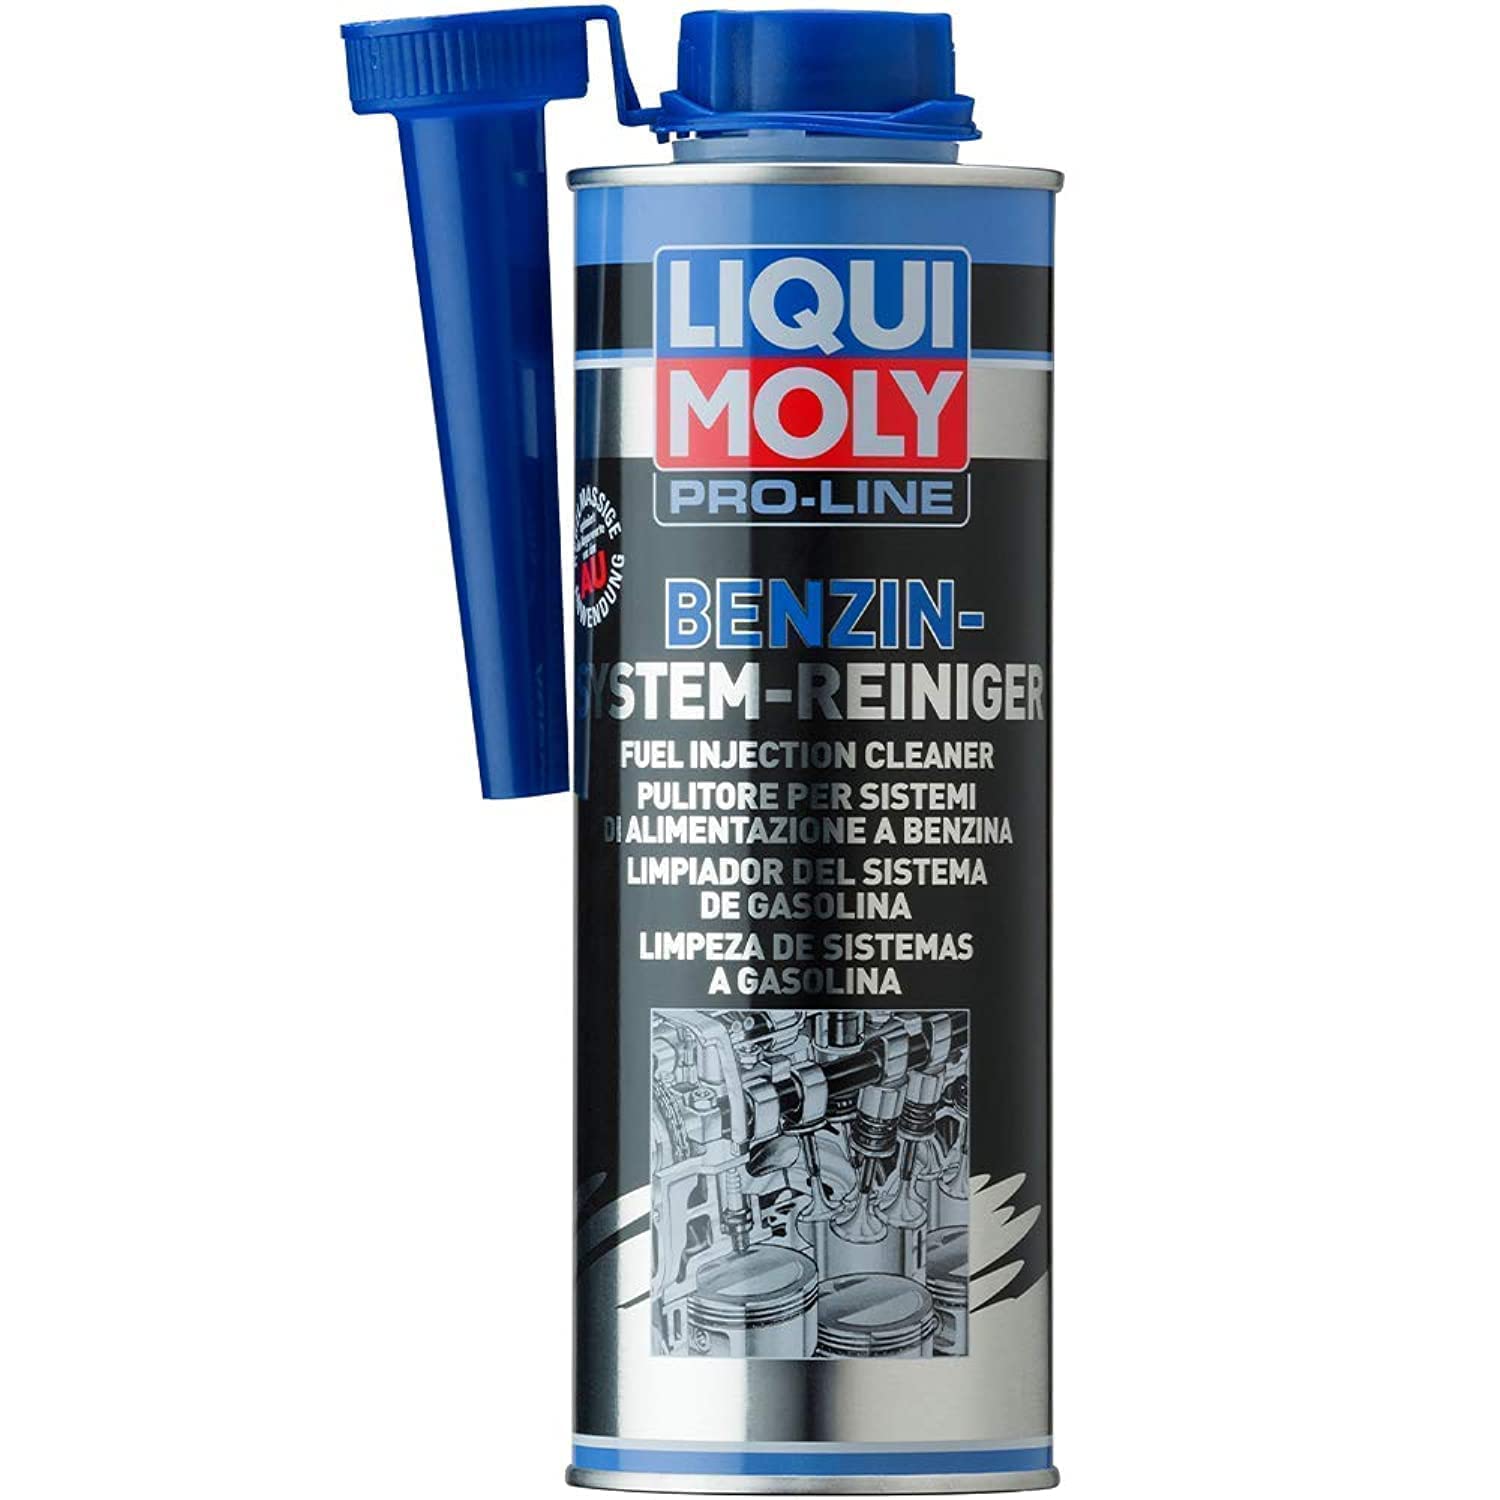 LIQUI MOLY Pro-Line Benzin-System-Reiniger | 500 ml | Benzinadditiv | Art.-Nr.: 5153 von Liqui Moly